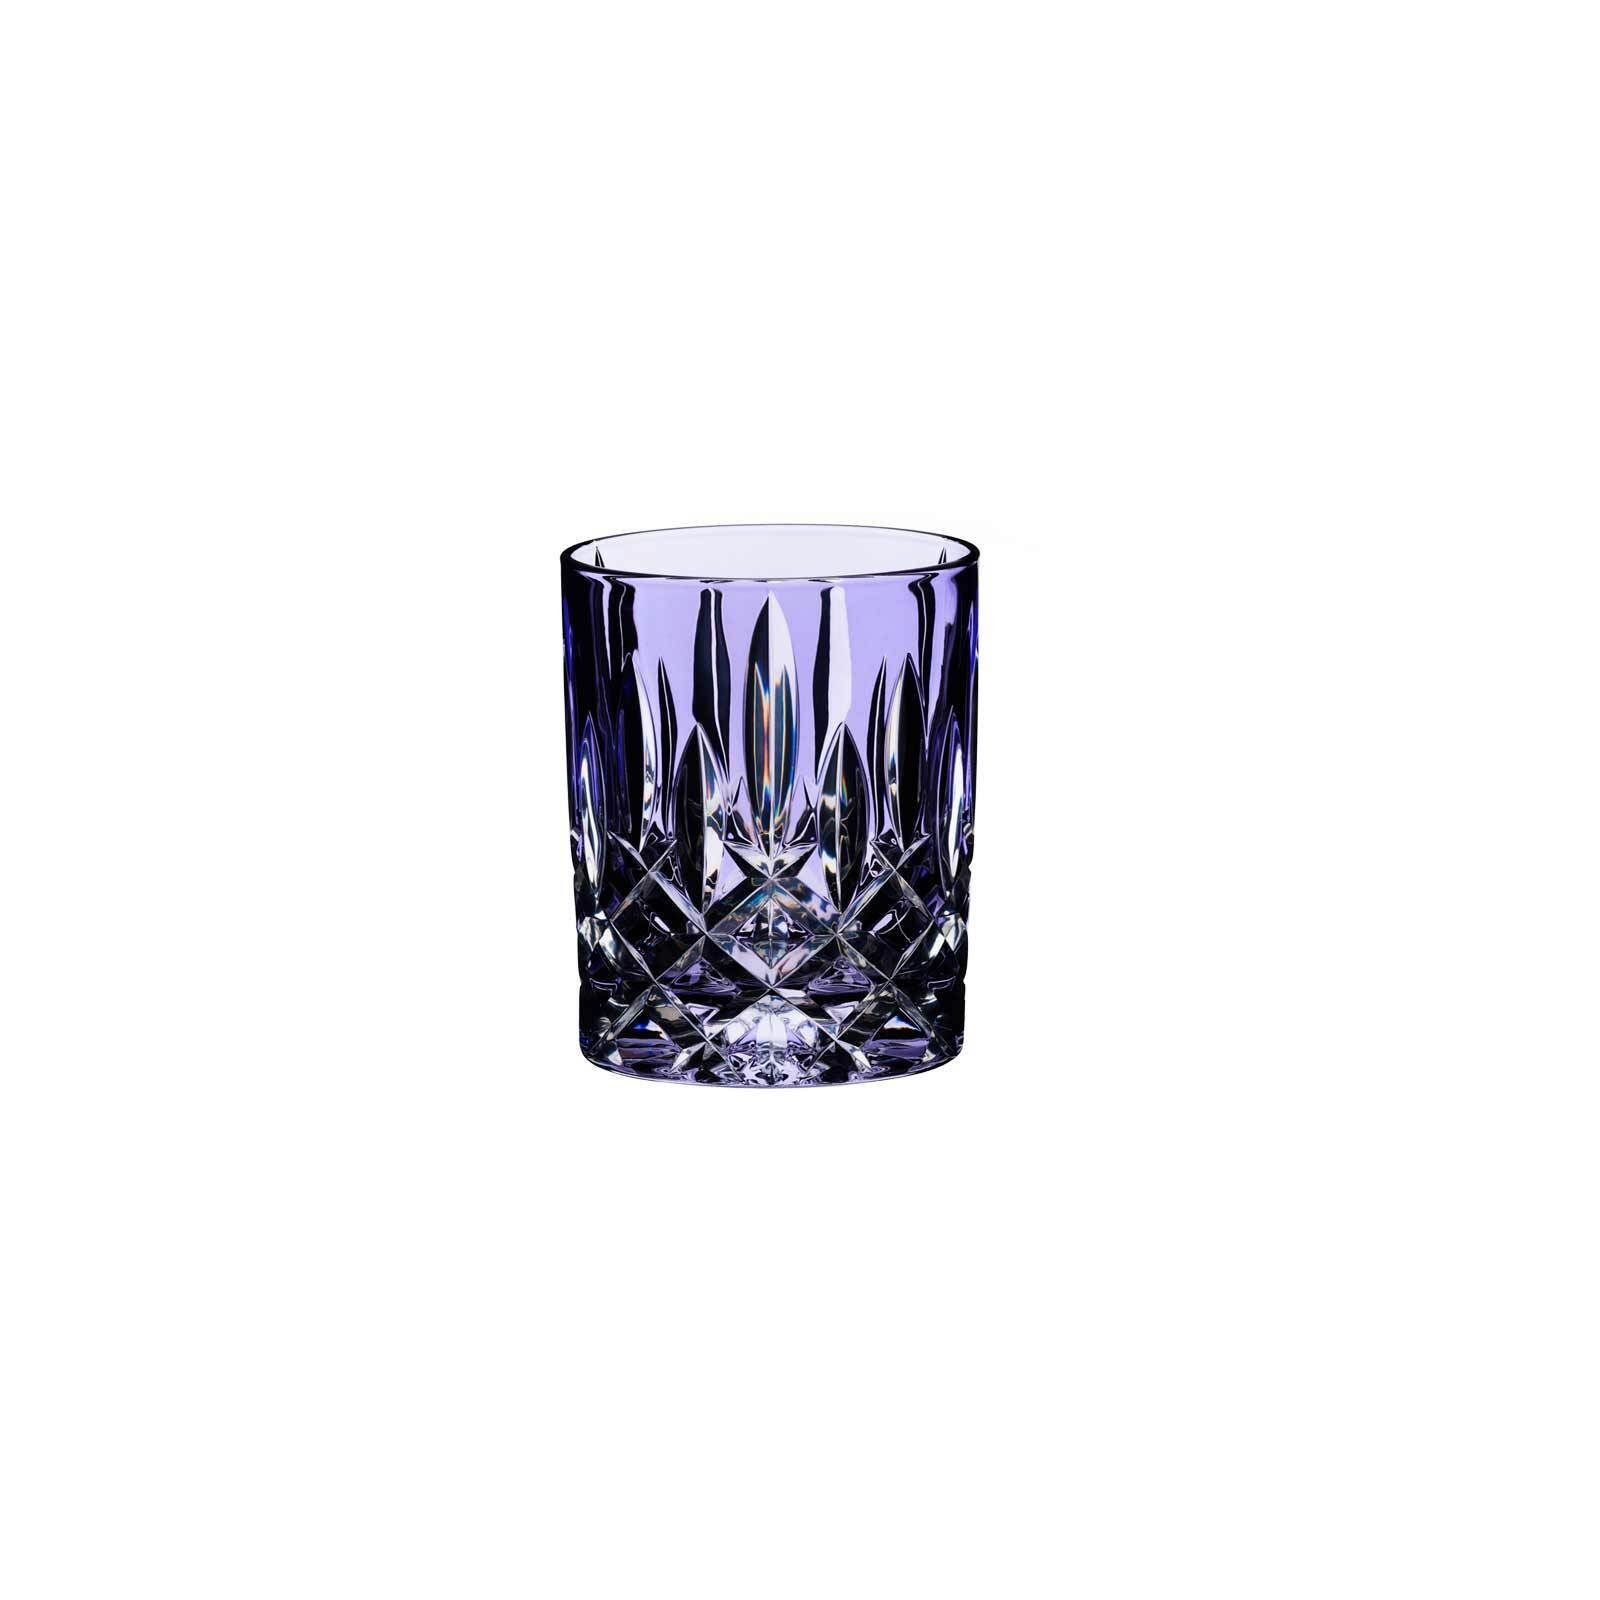 Glas Whiskyglas Glas 295 Whiskyglas RIEDEL Violett ml, Laudon